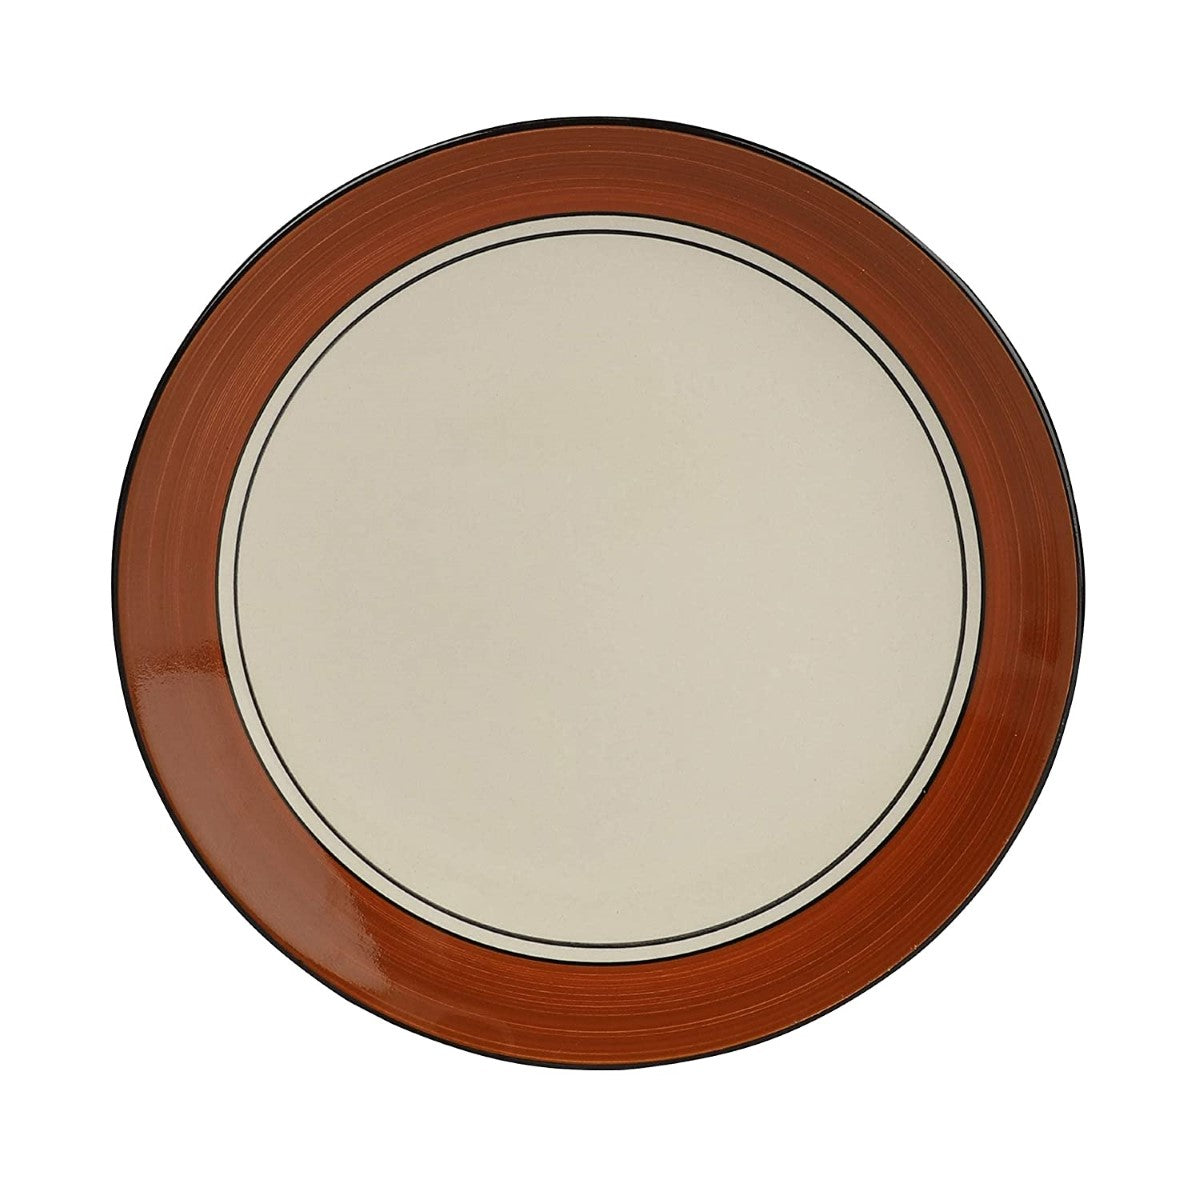 Cream & Brown Handpainted Ceramic Dinner Plates (Set of 2)